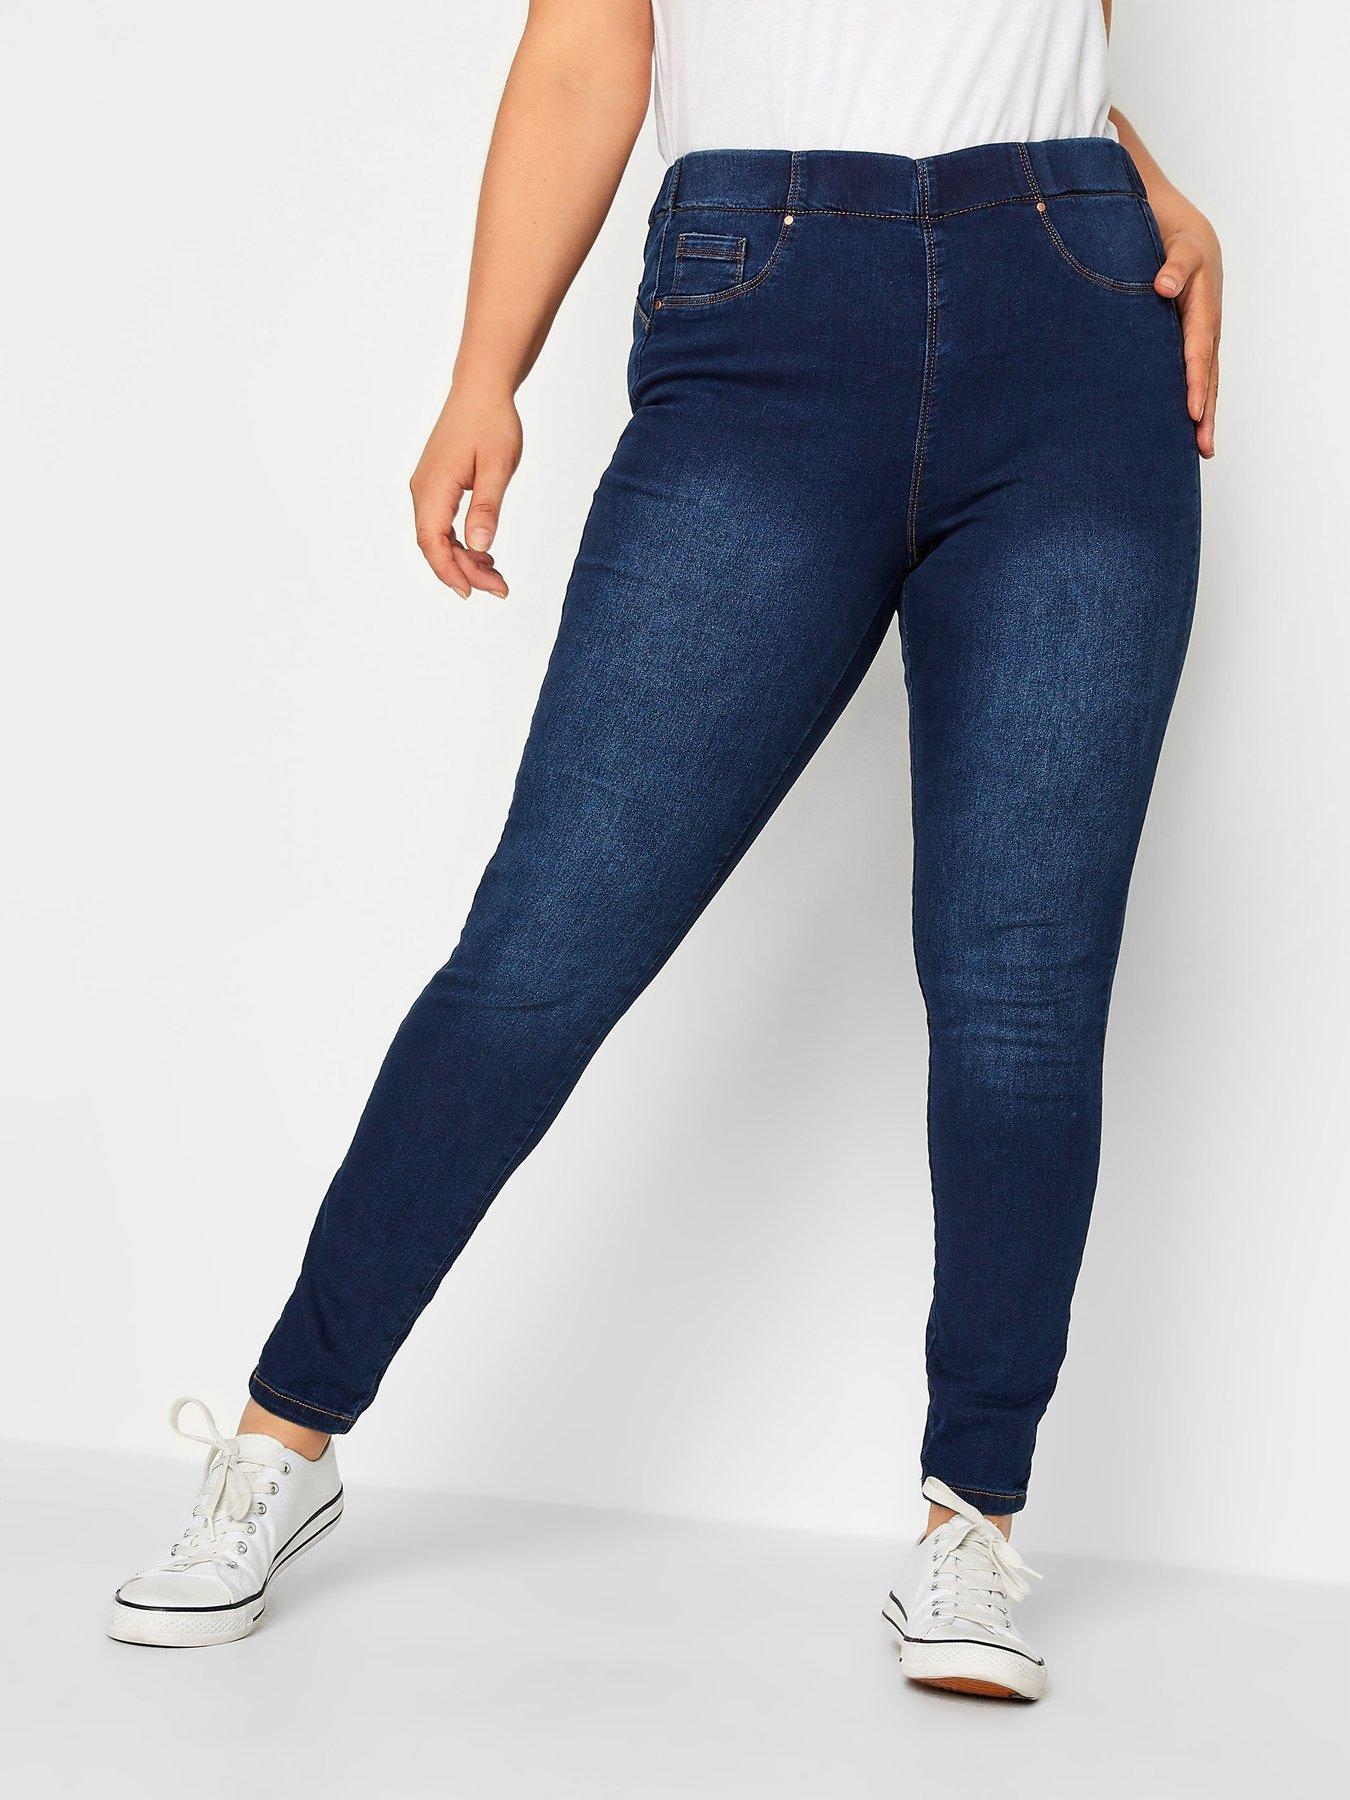 Size 16 Women's Jeans, Sizes 14-36